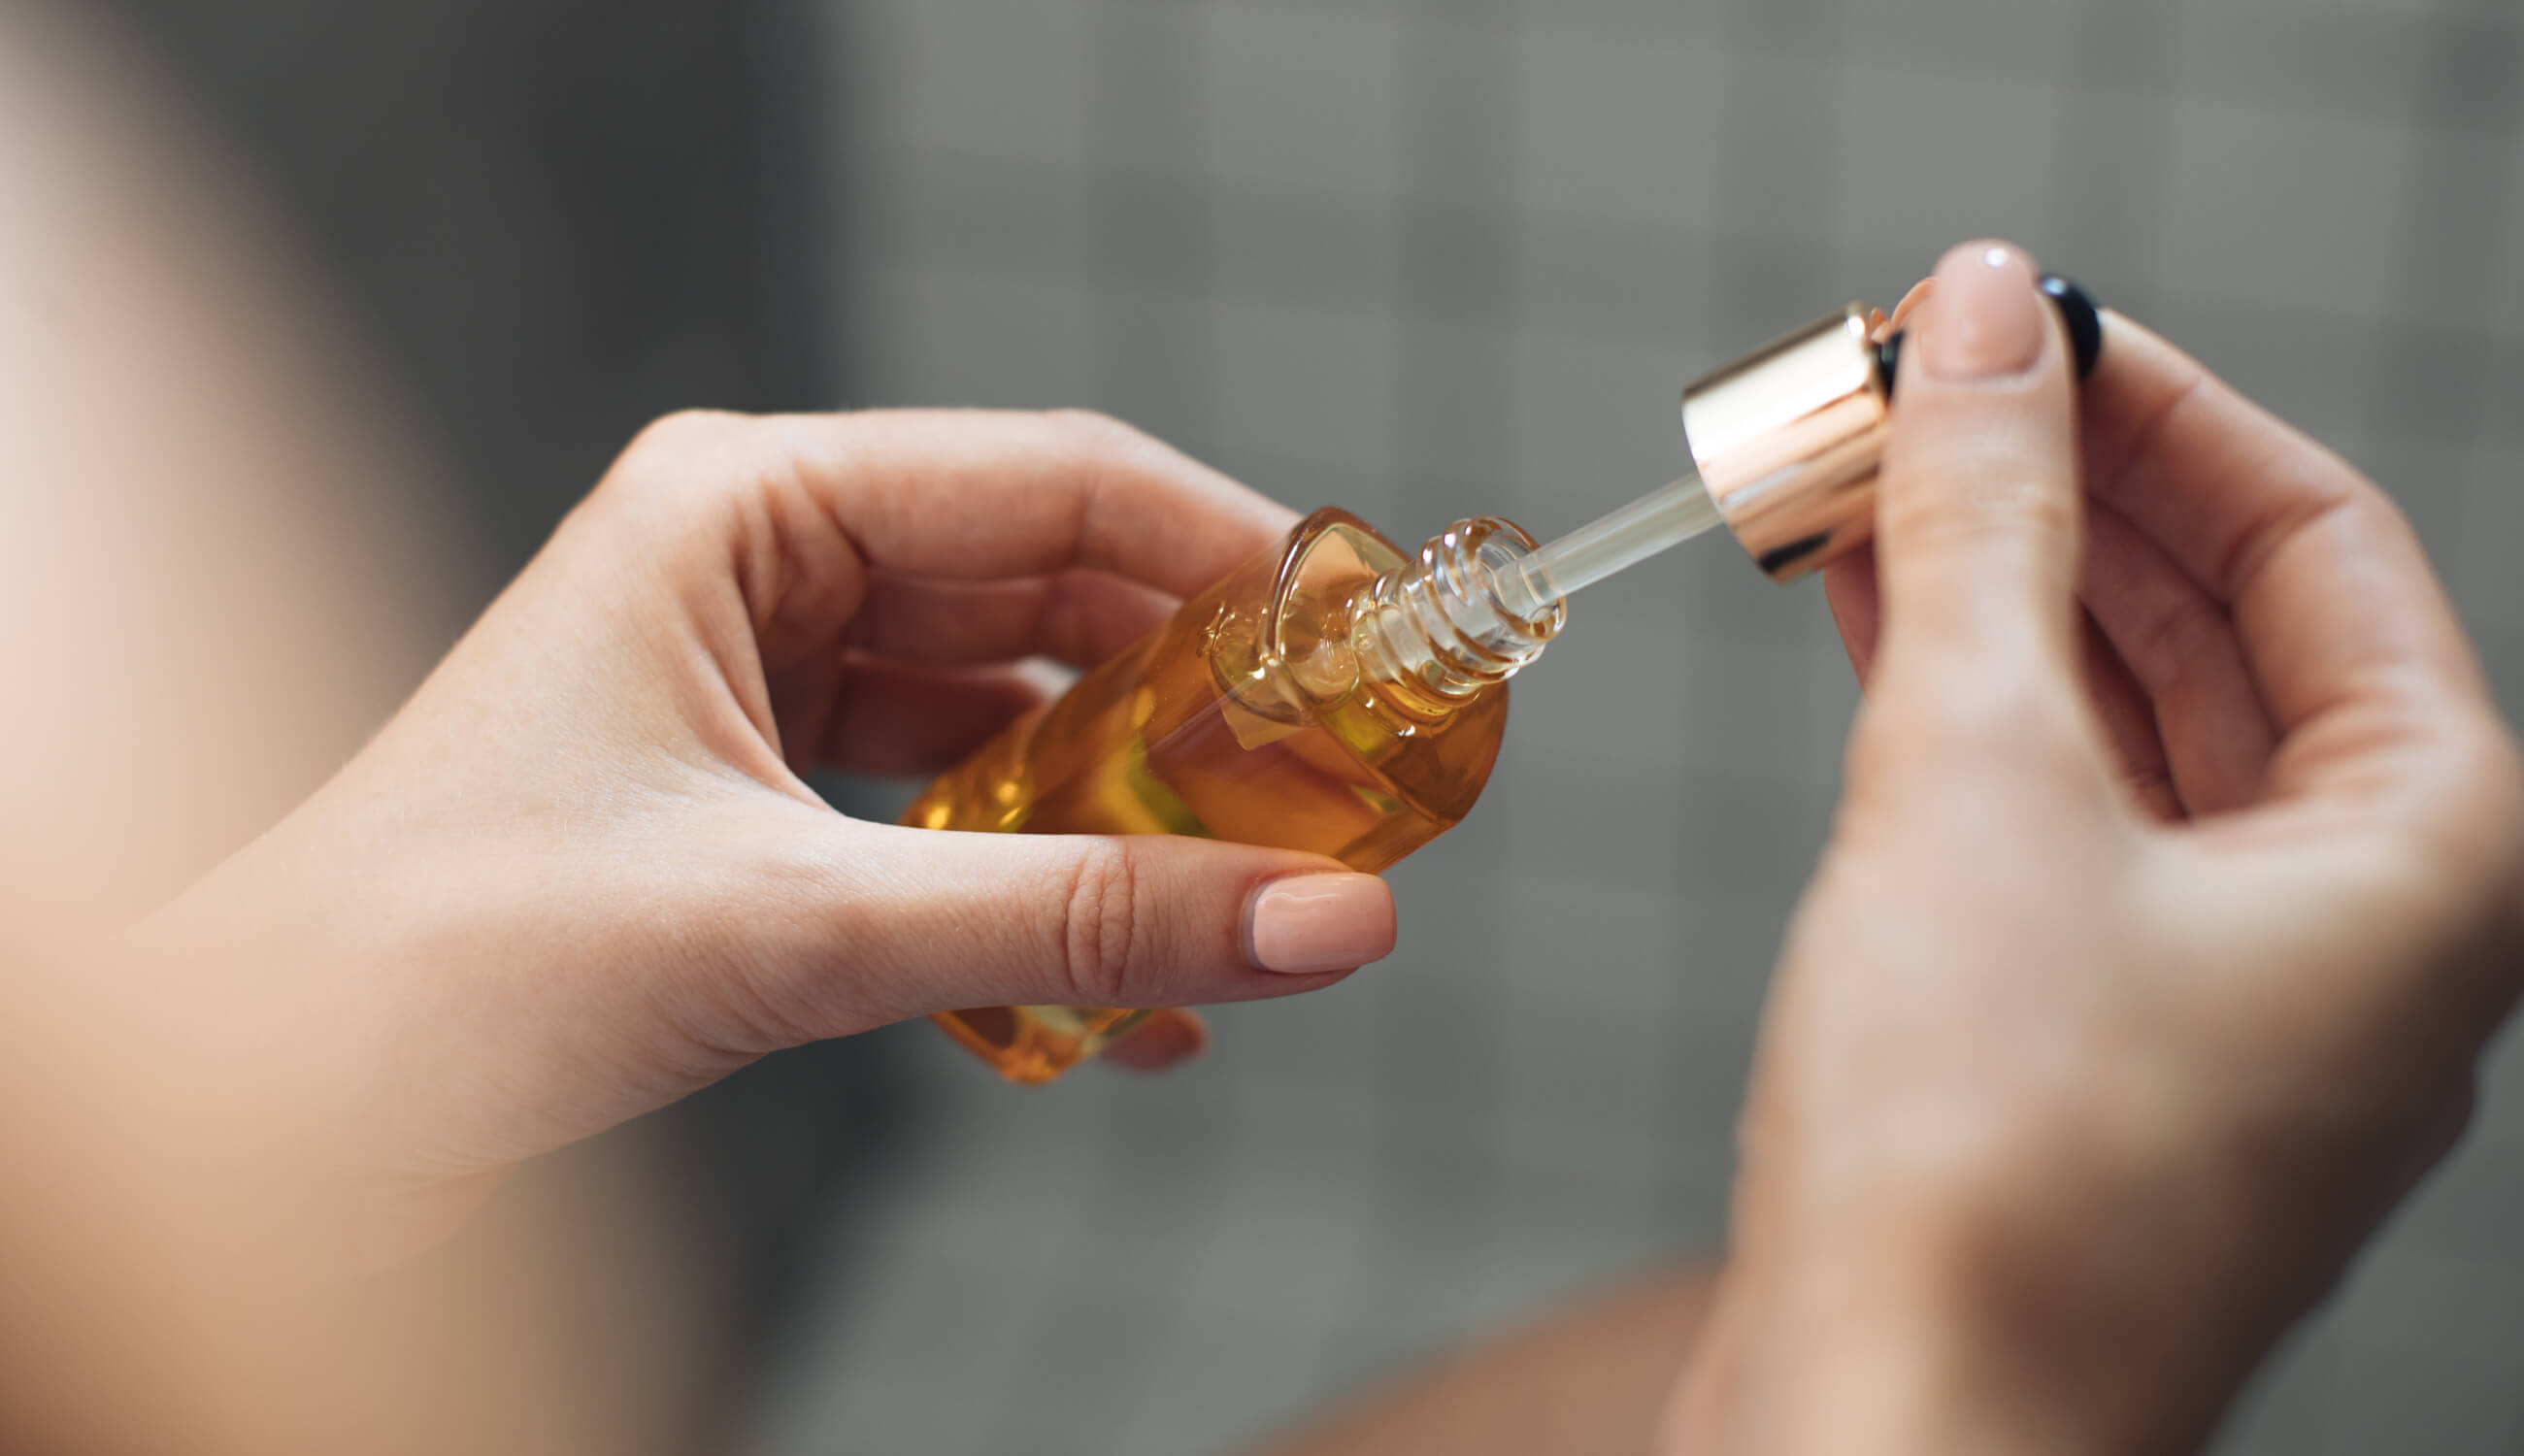 Woman using oil in bottle for acne-prone skin